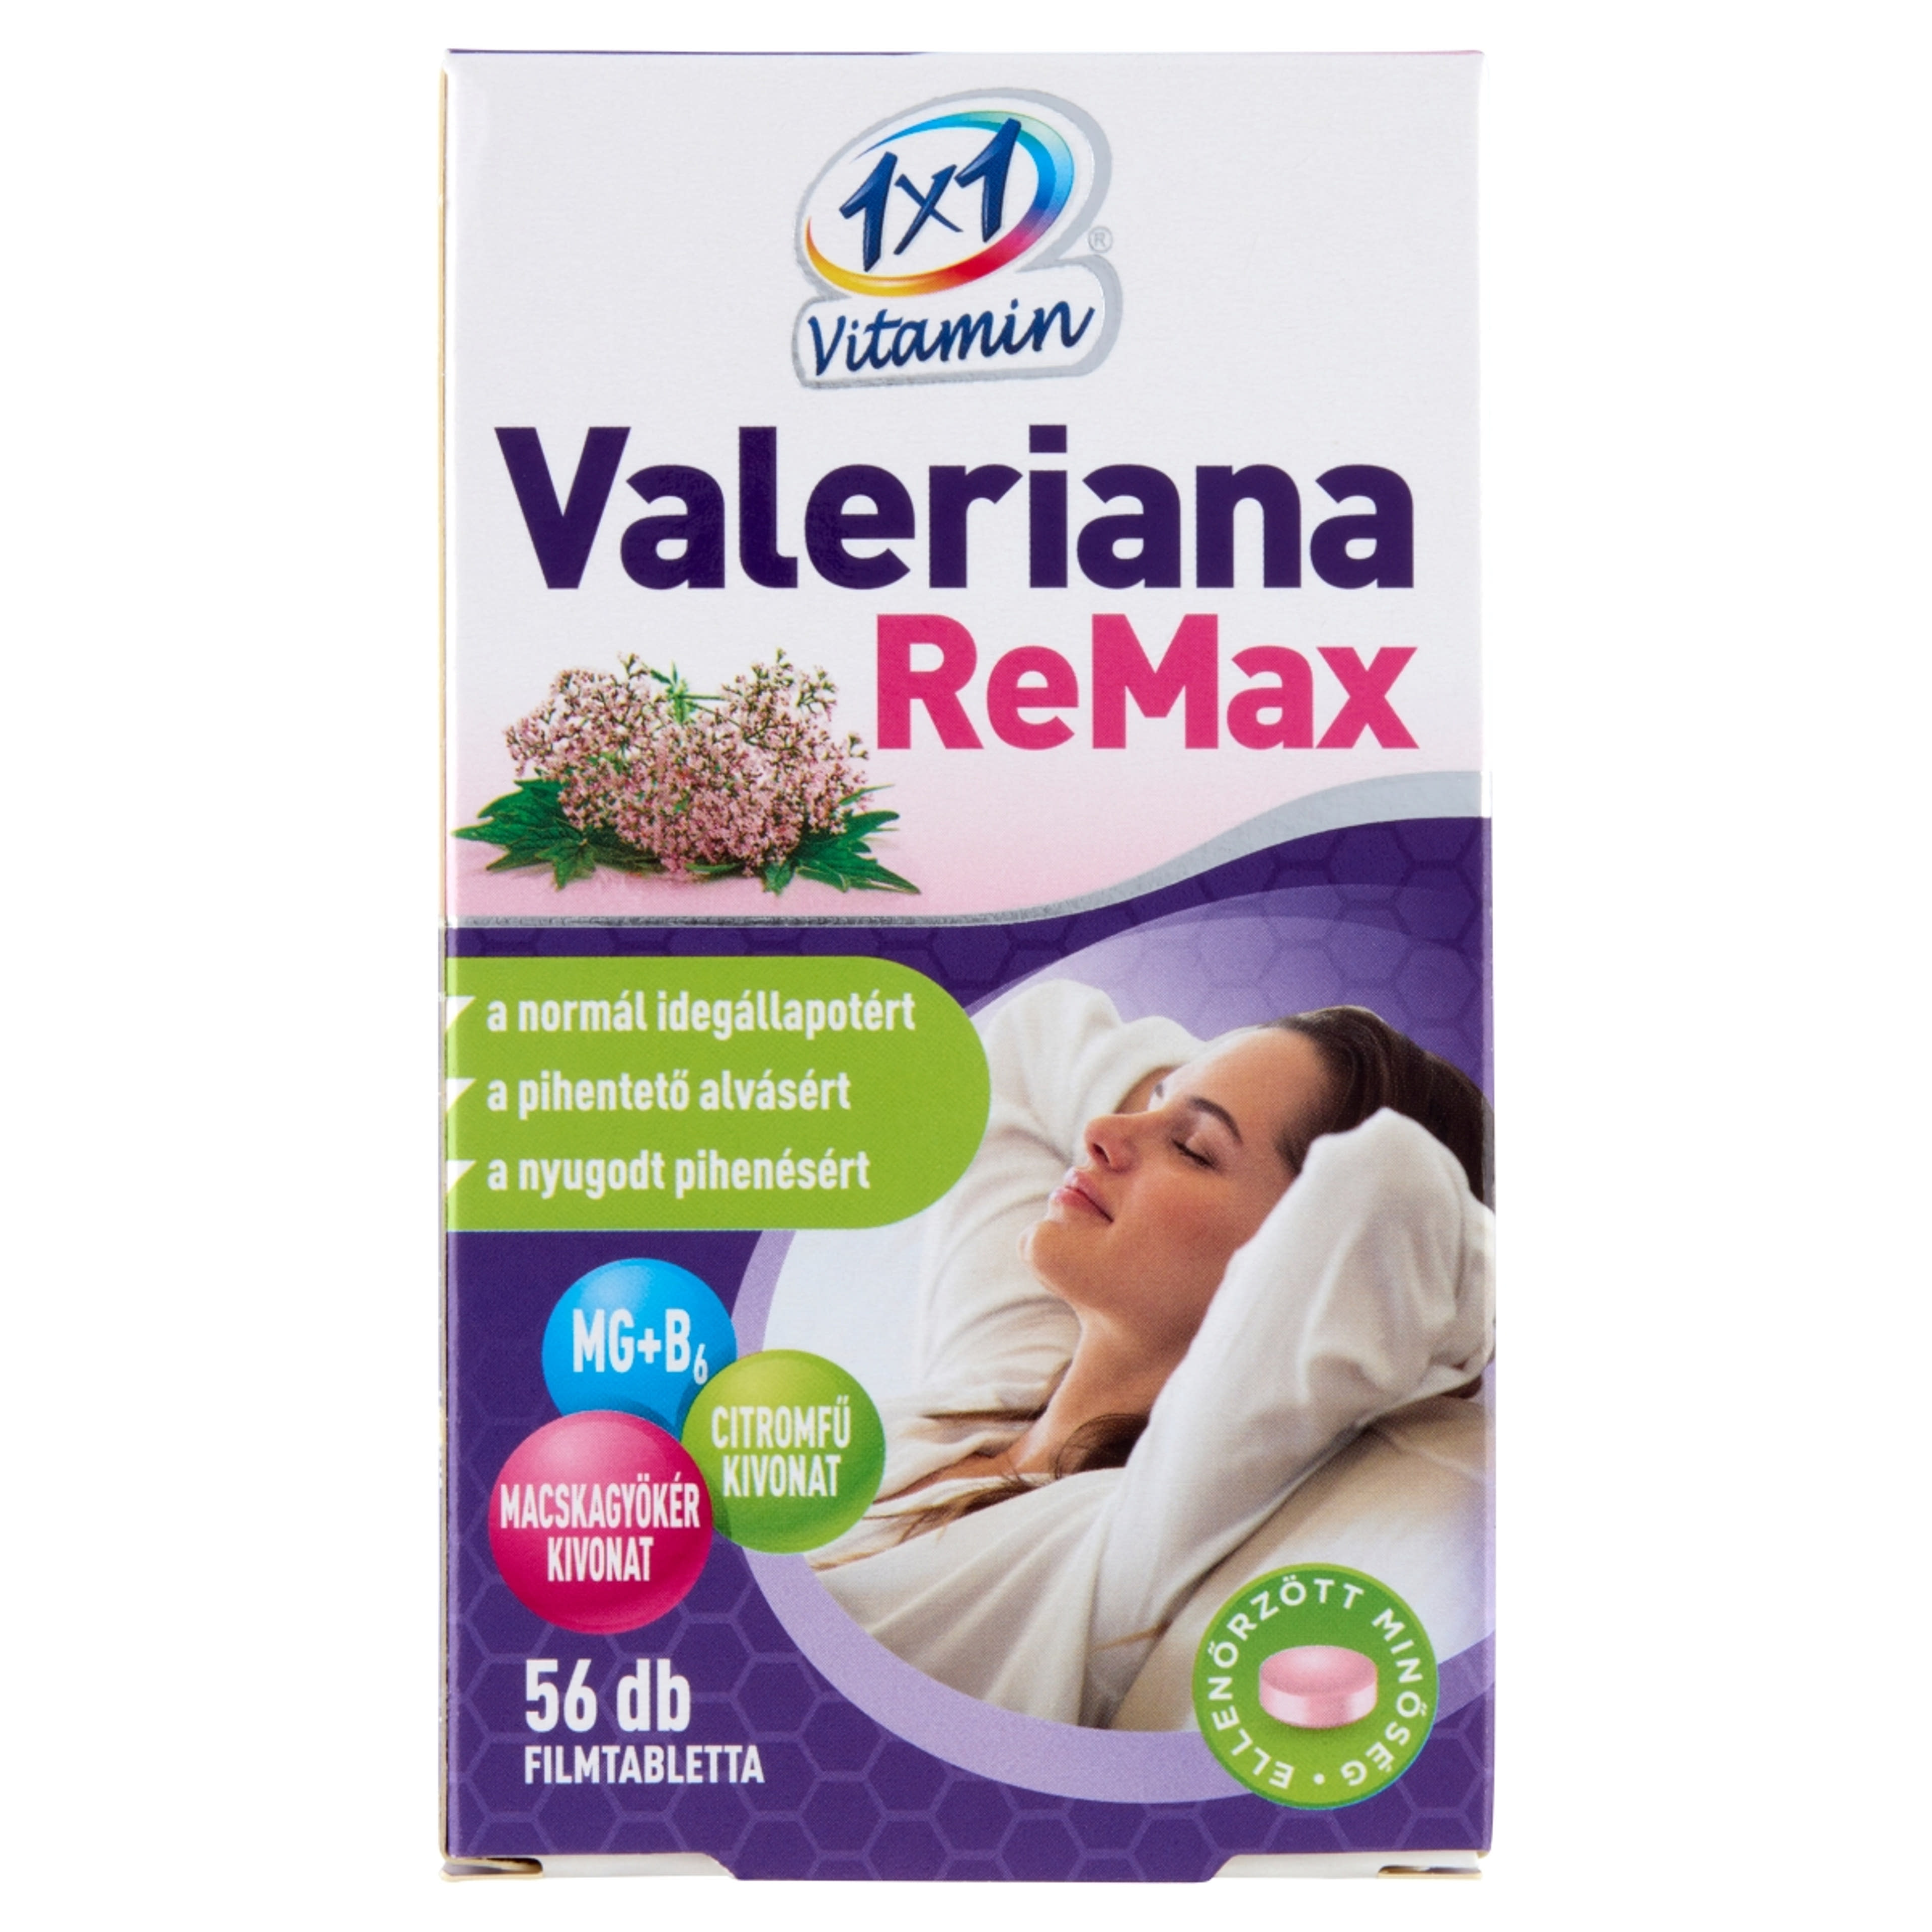 1x1 vitamin valeriana remax étrend-kiegészítő filmtabletta - 56 db